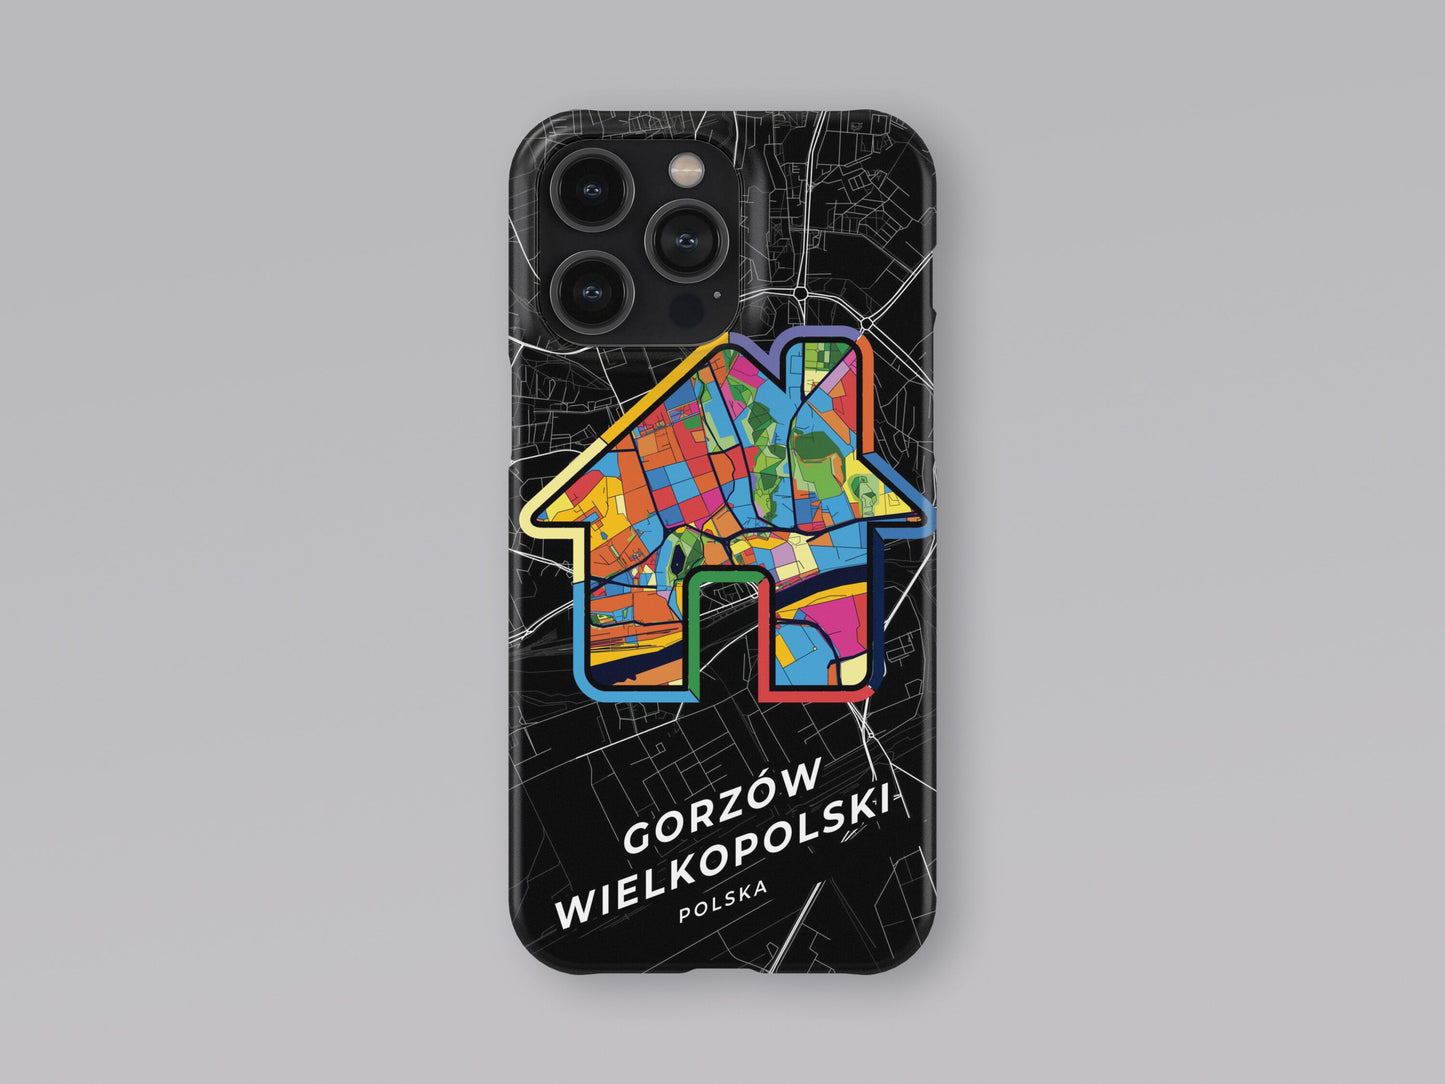 Gorzów Wielkopolski Poland slim phone case with colorful icon. Birthday, wedding or housewarming gift. Couple match cases. 3